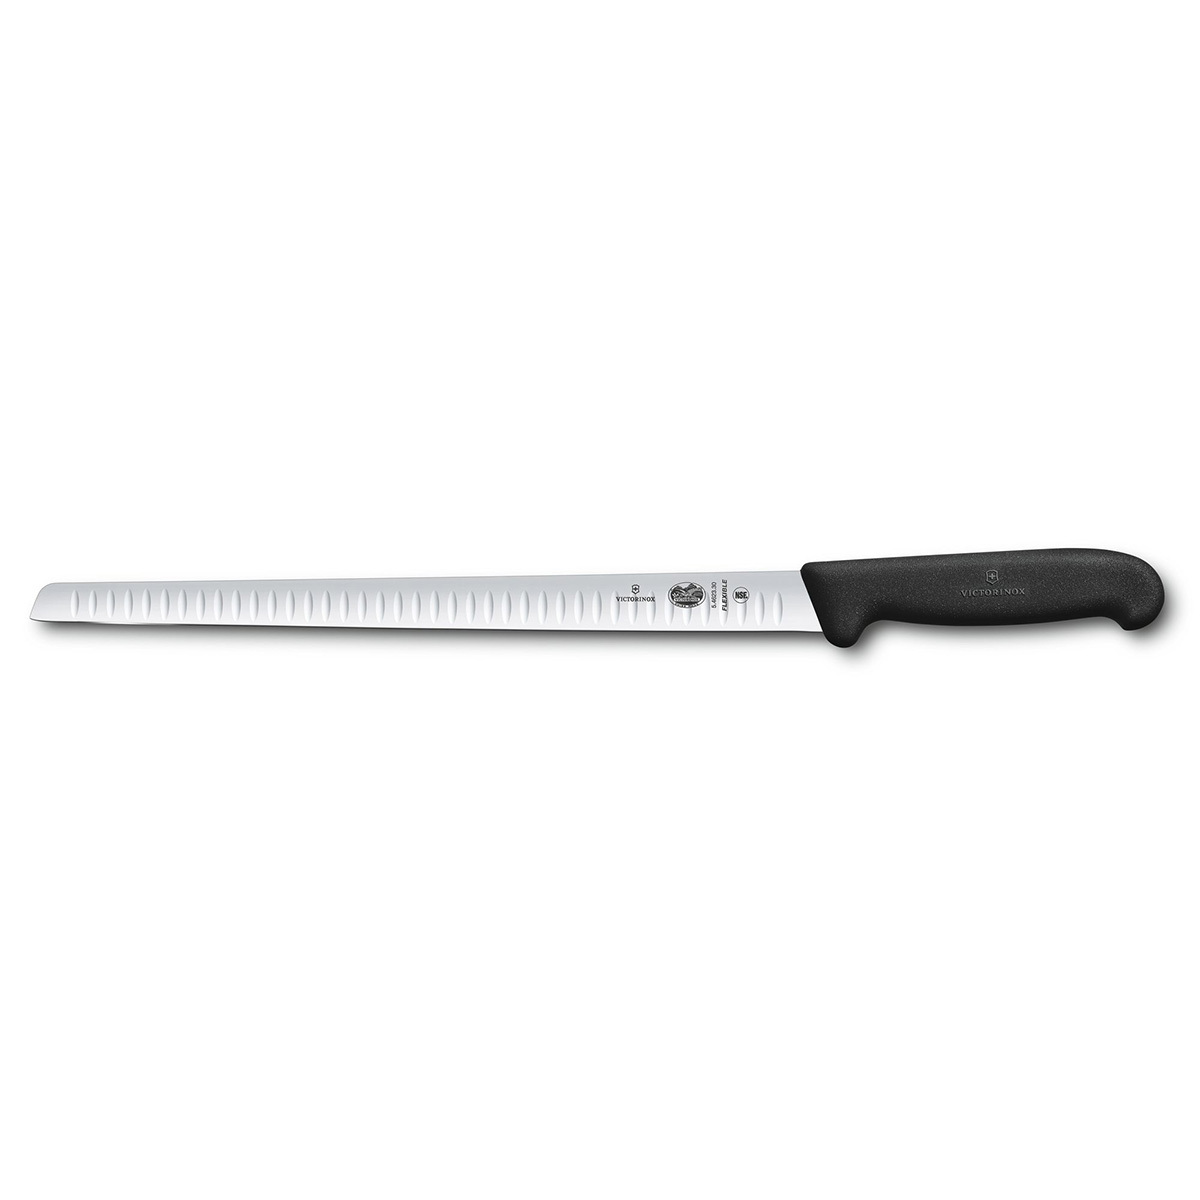 Кухонный нож рыбы Victorinox 5.4623.30 кухонный нож для овощей victorinox 6 7706 l114